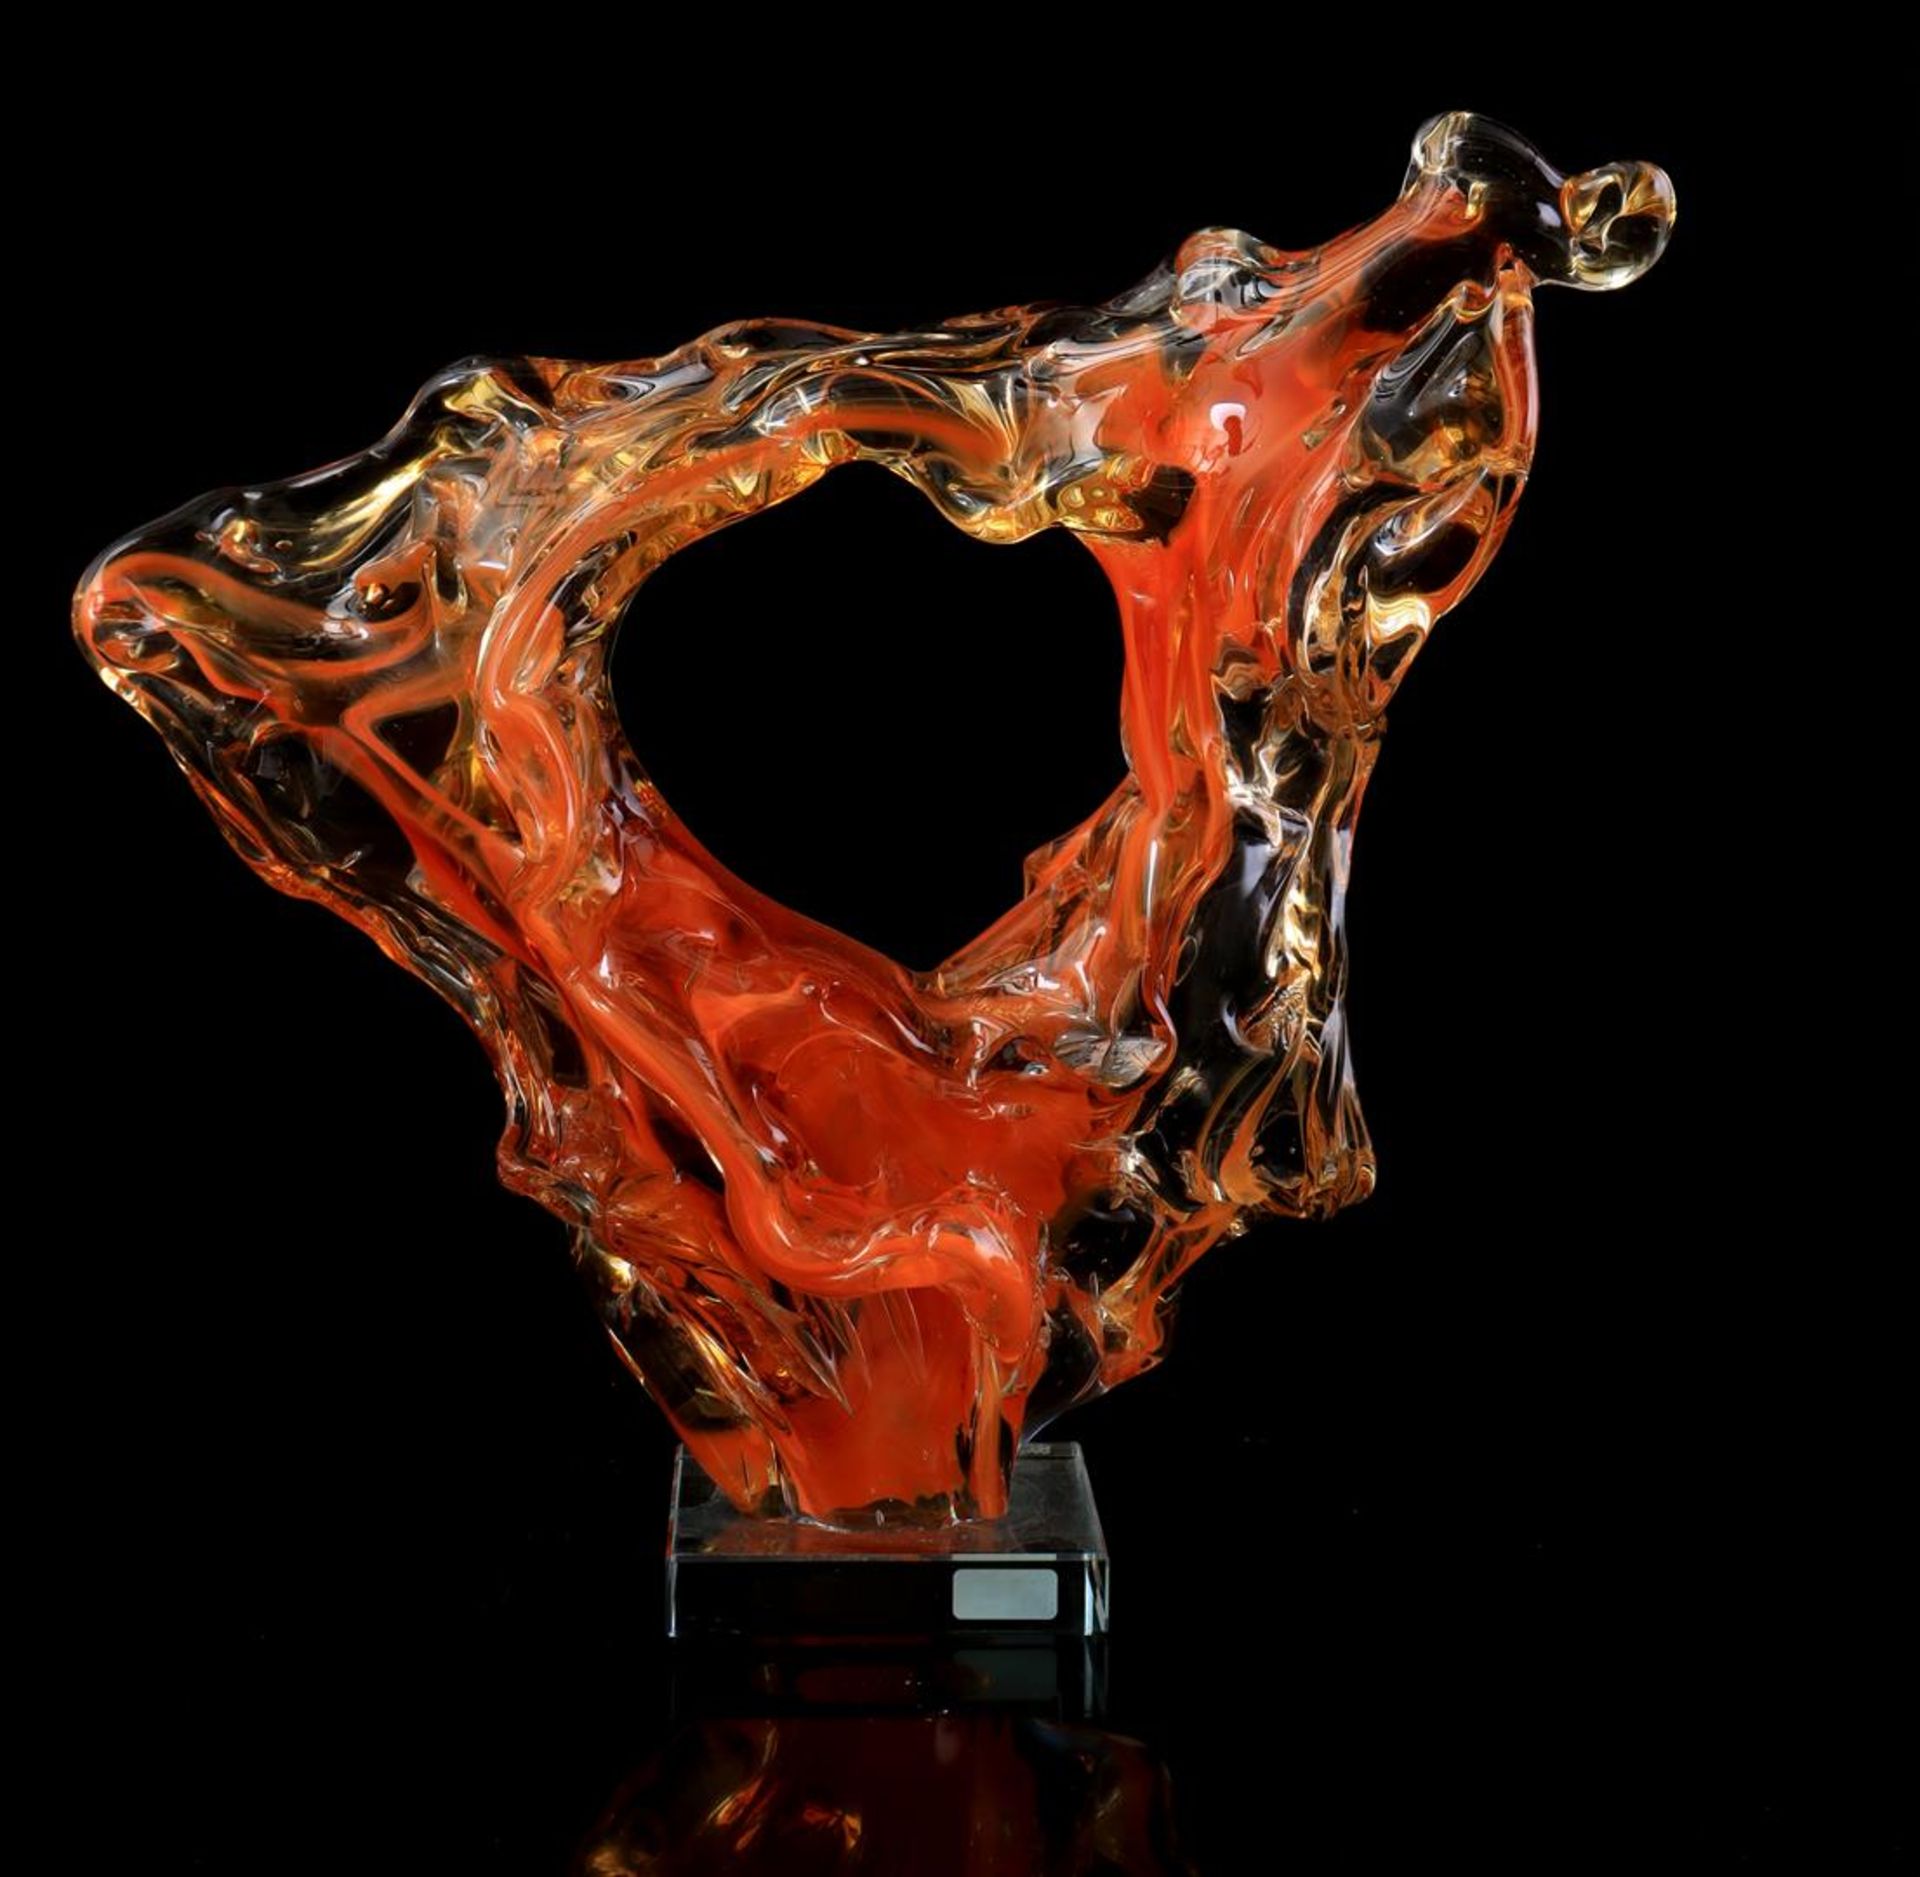 Glass ornamental object